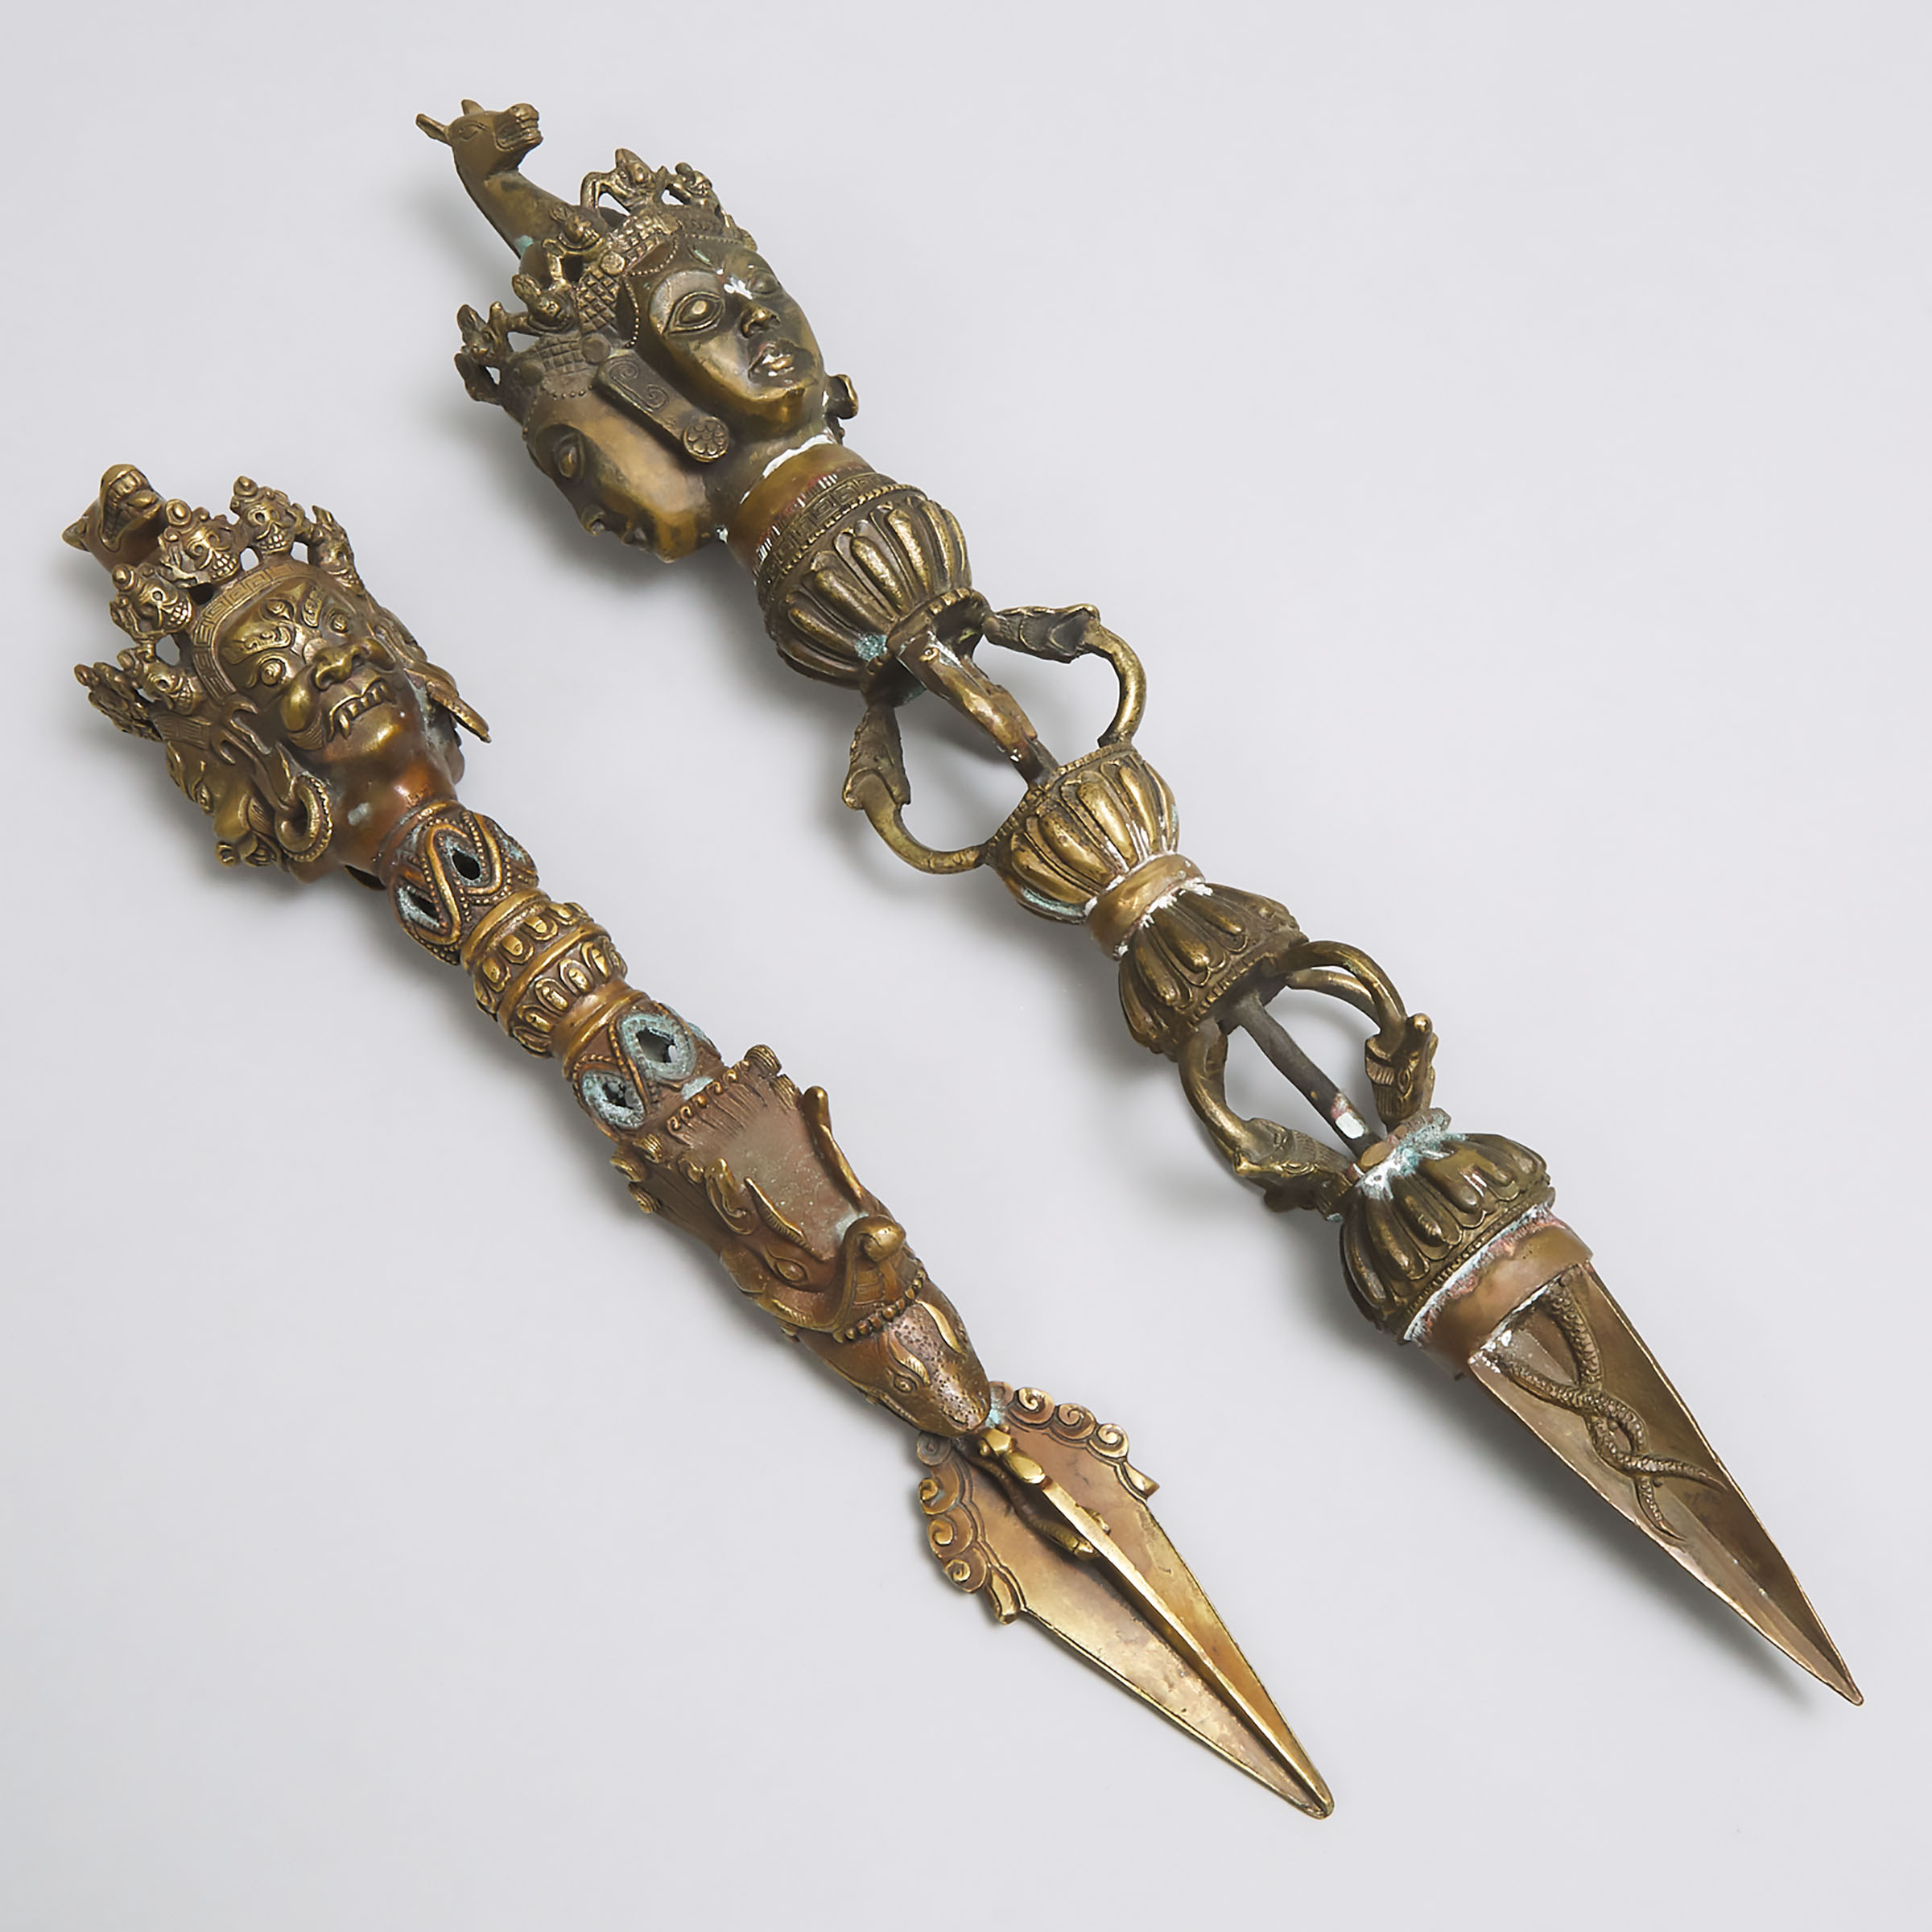 Two Indo-Tibetan Bronze Ceremonial Phurba Daggers, early 20th century